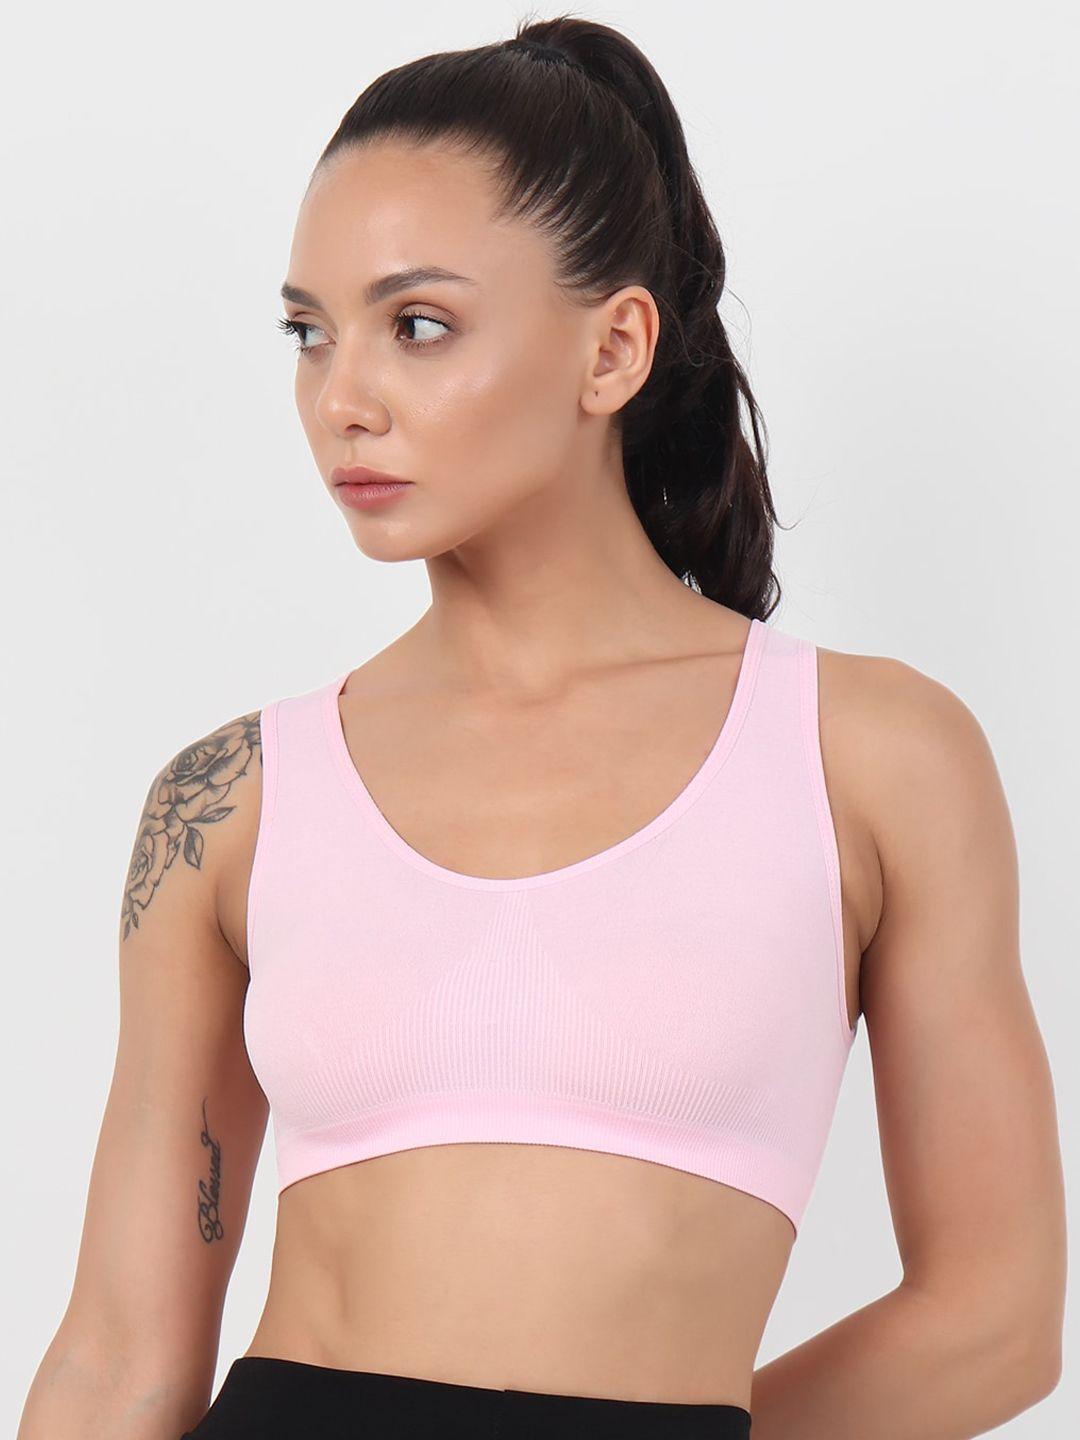 xoxo design pink solid workout bra